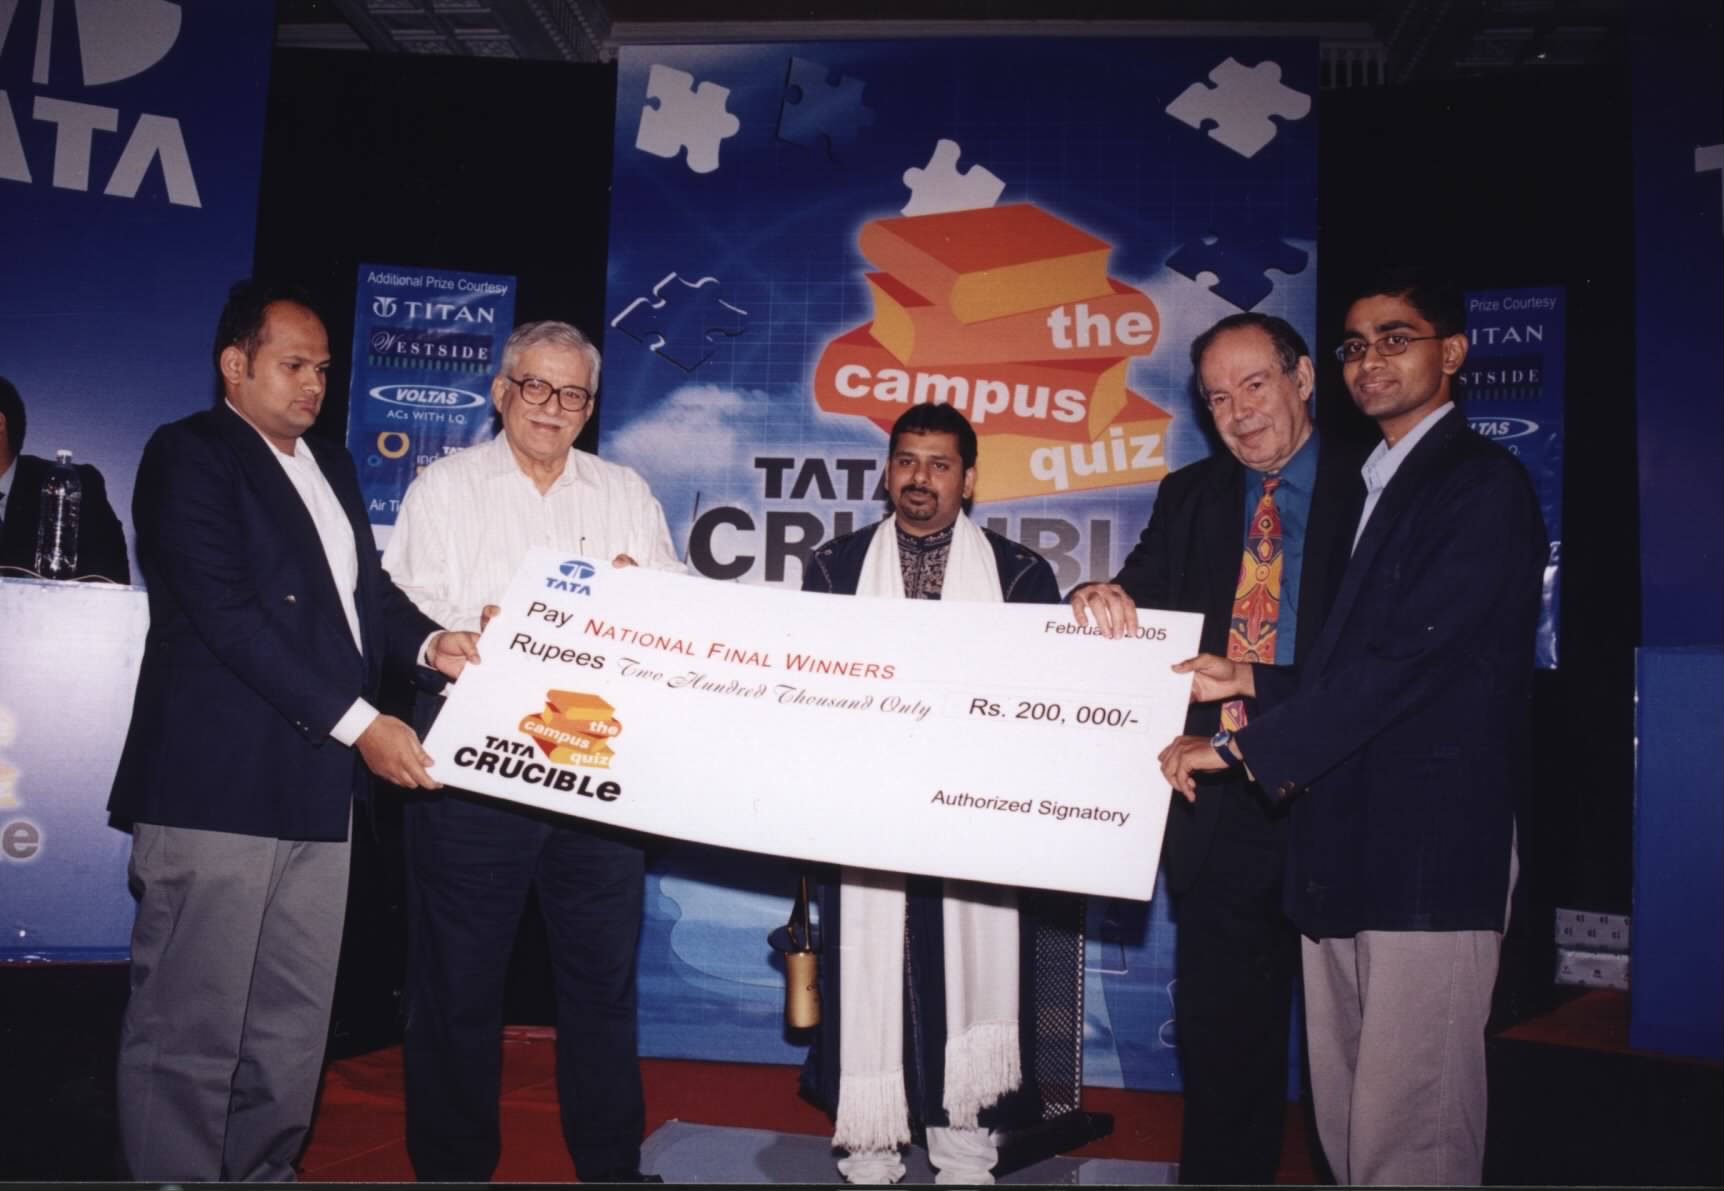 Tata Crucible Campus Quiz winners sify